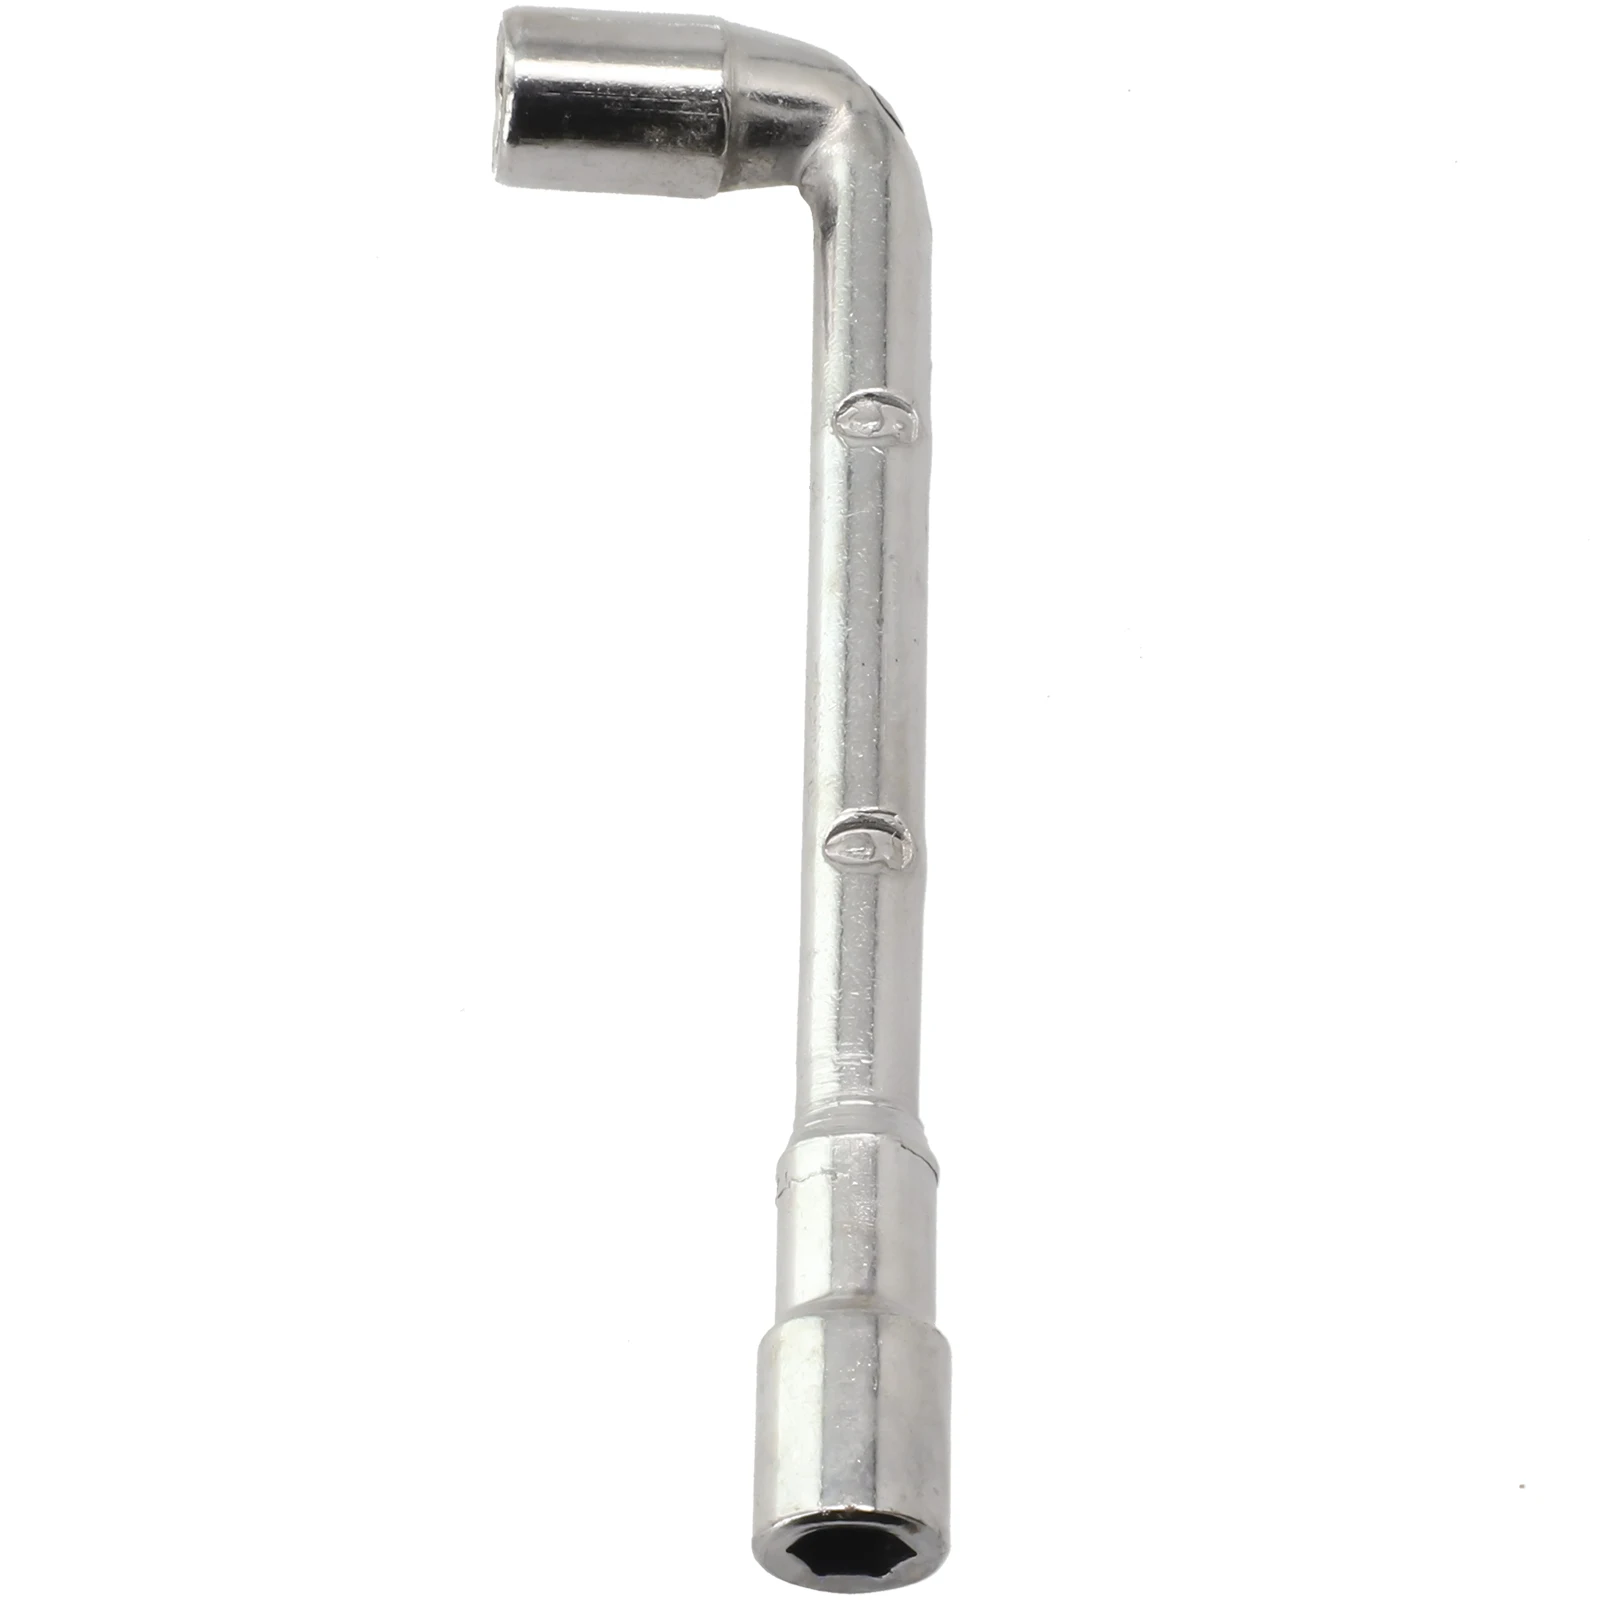 

L-shaped Socke Wrench Hand Tool Hexagonal Maintenance Nozzles Nut Parts Repairing Screw Sleeve 6/7mm 97mm Fasten